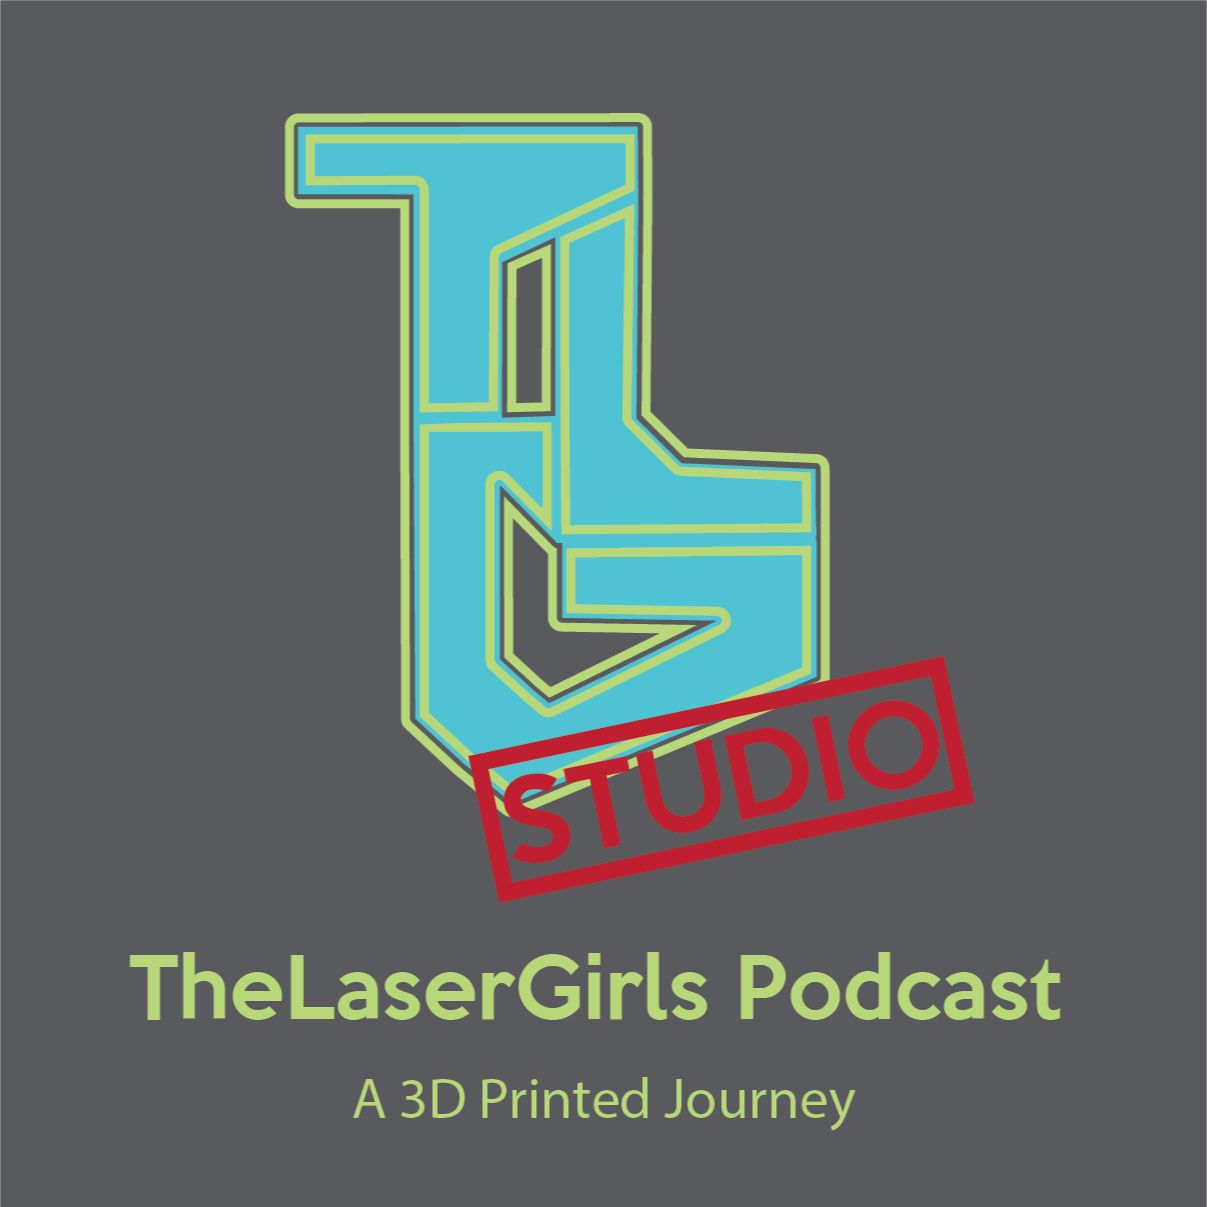 TheLaserGirls Podcast